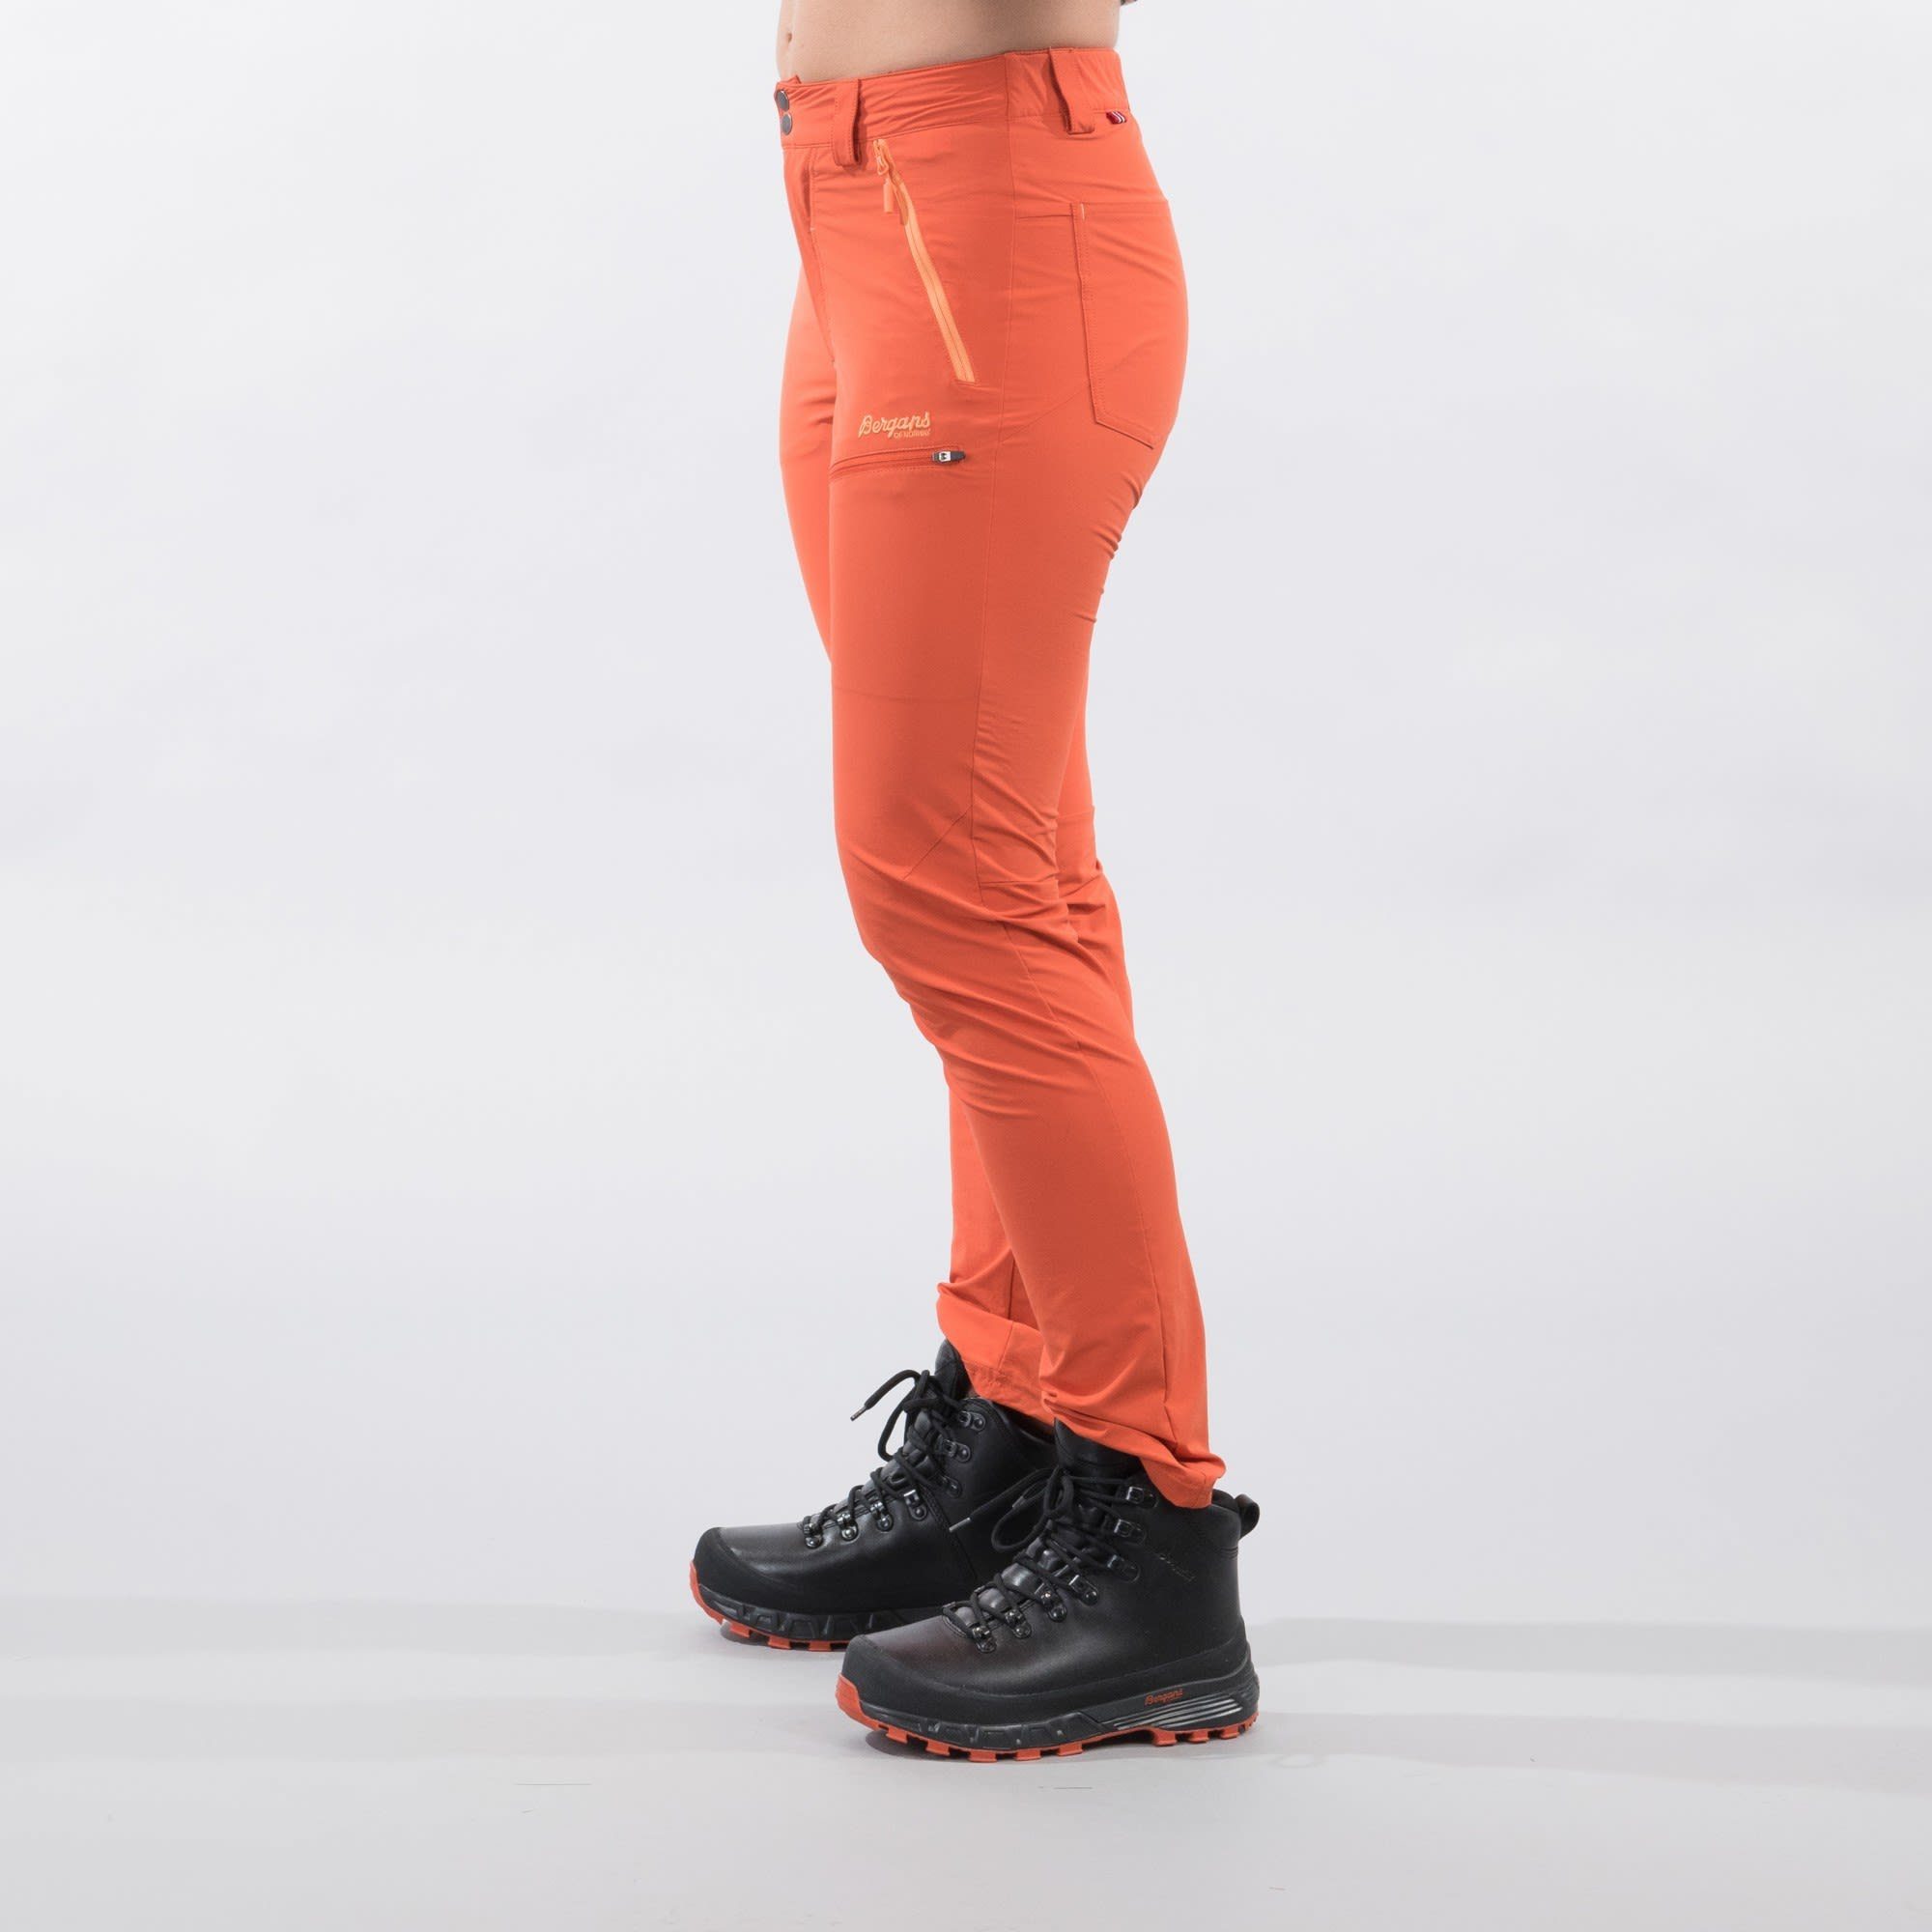 Damen Bergans Tyin orange Hose Shorts Bergans & Softshellhose W Pants